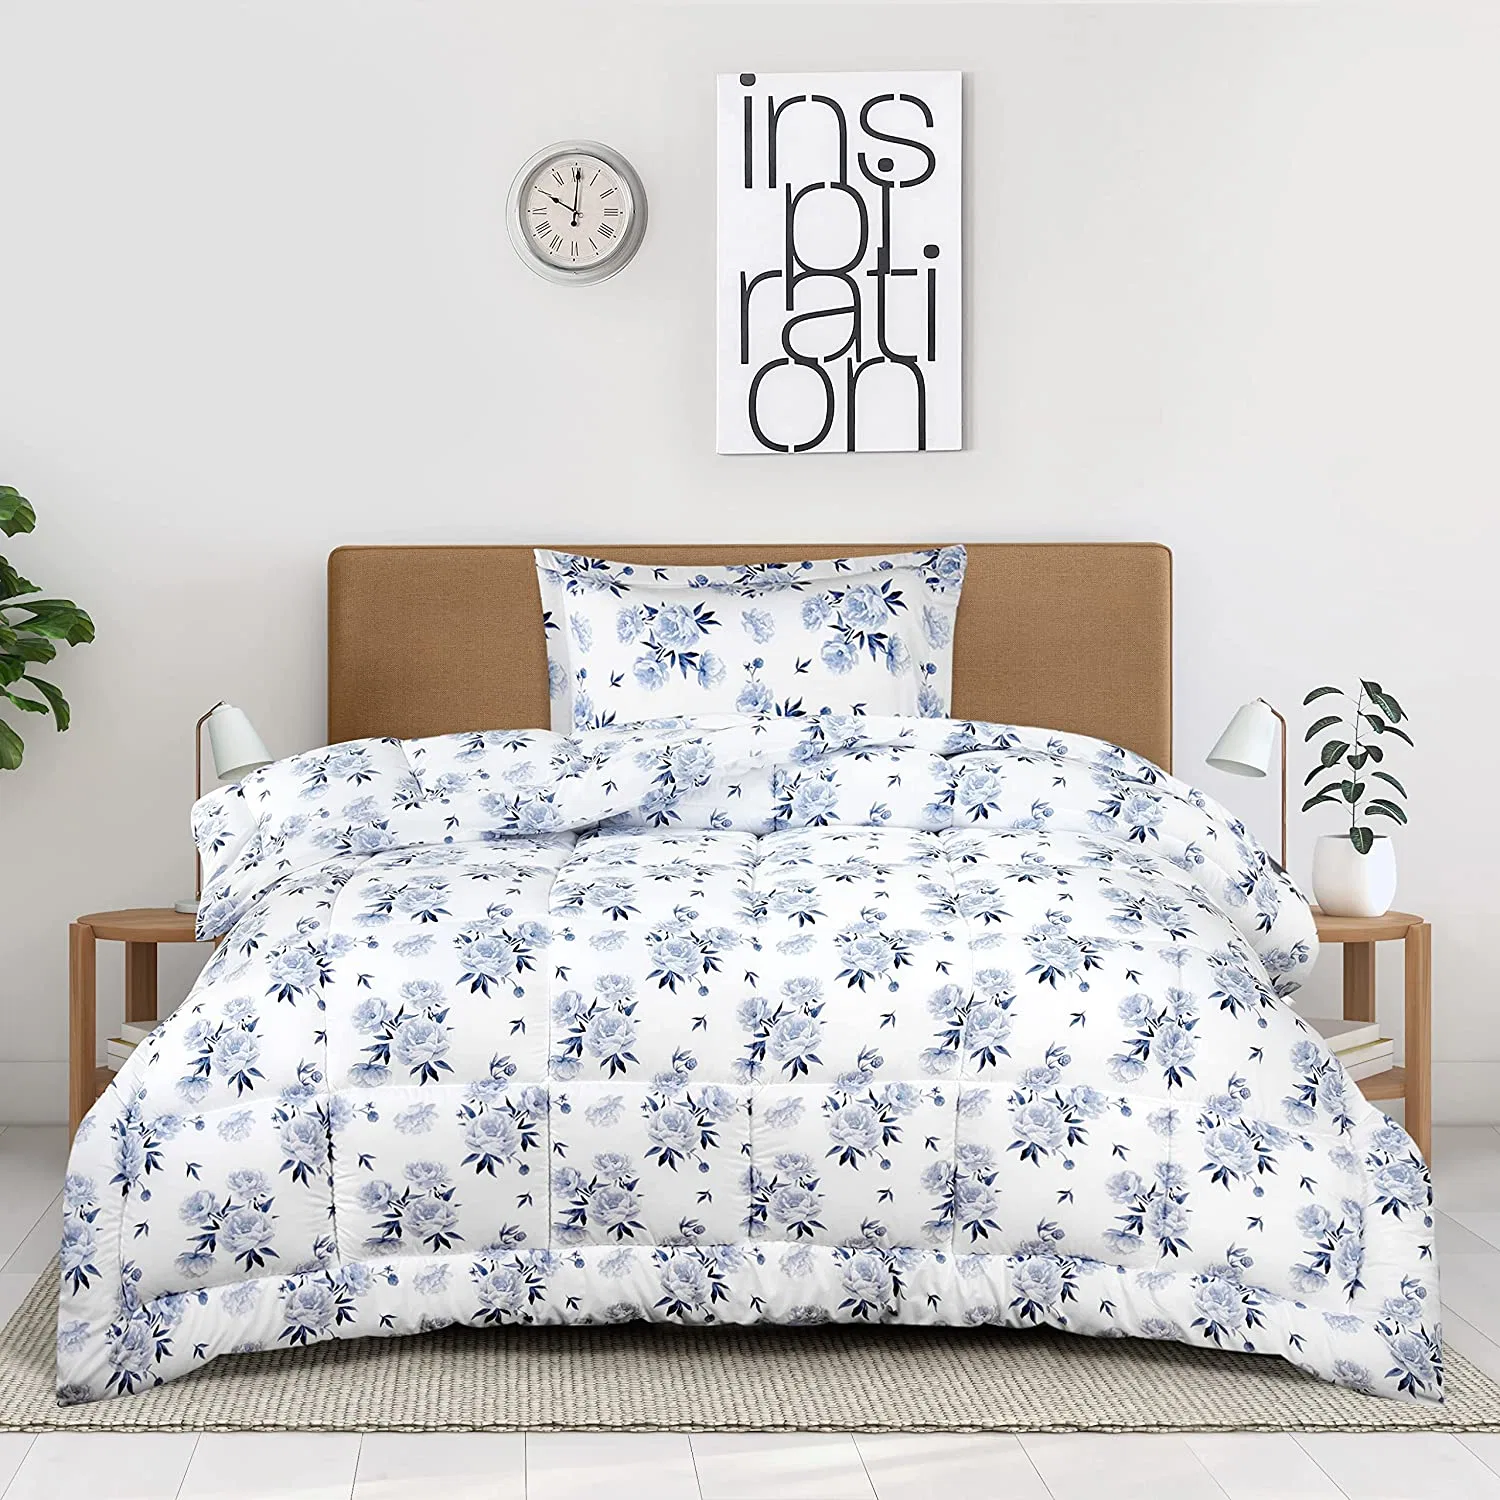 Bedding Twin Comforter Set Kids (Rose Floral) with 1 Pillow Sham - Bedding Comforter Sets - Down Alternative Comforter - Soft and Comfortable